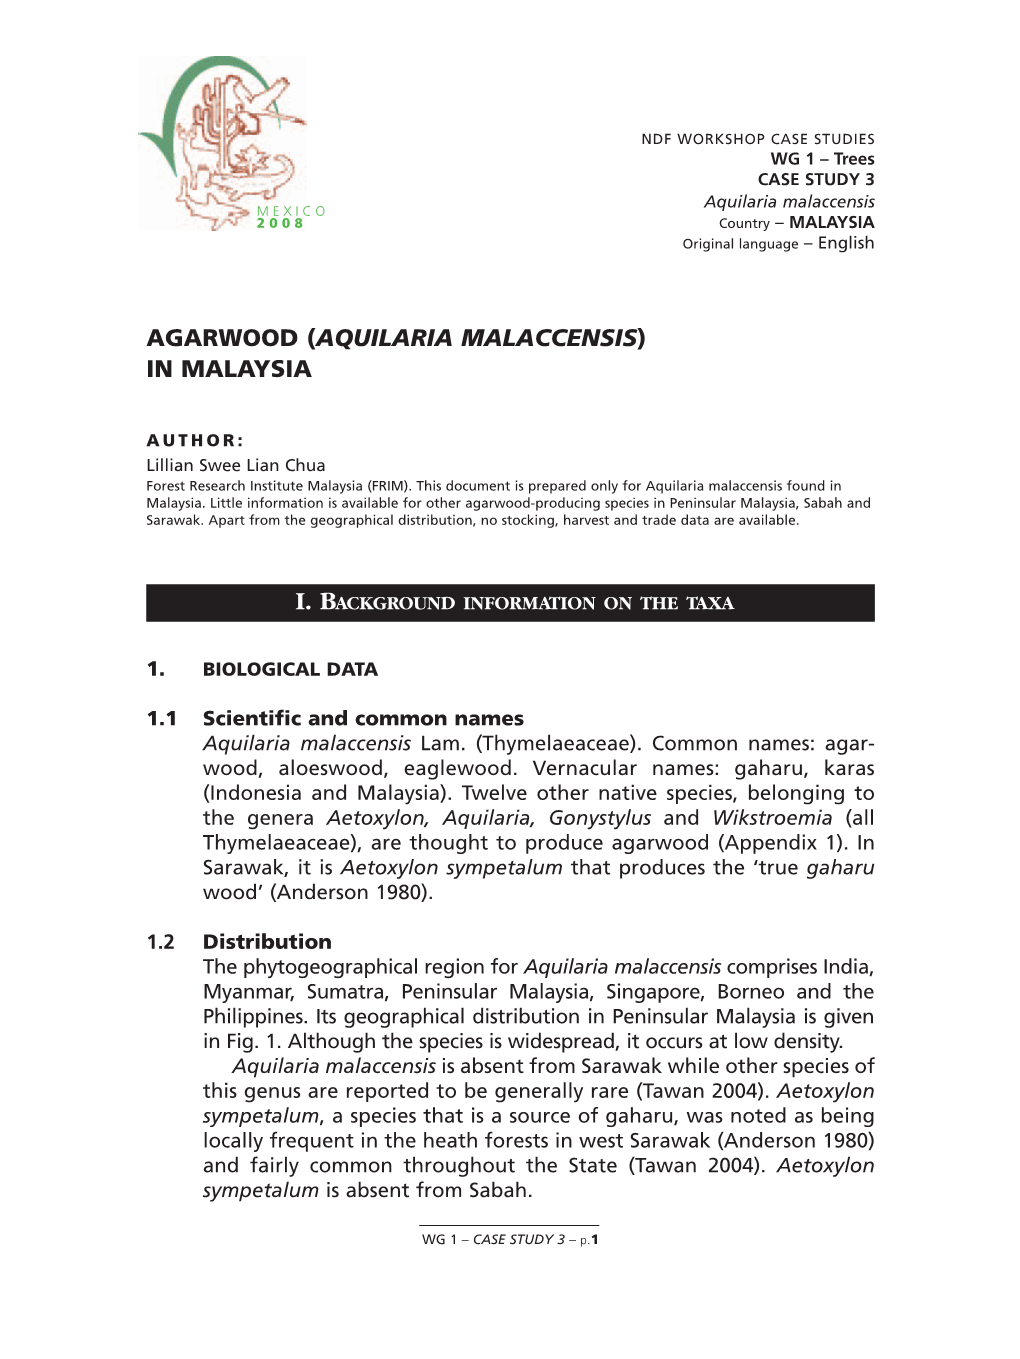 Aquilaria Malaccensis MEXICO 2008 Country – MALAYSIA Original Language – English